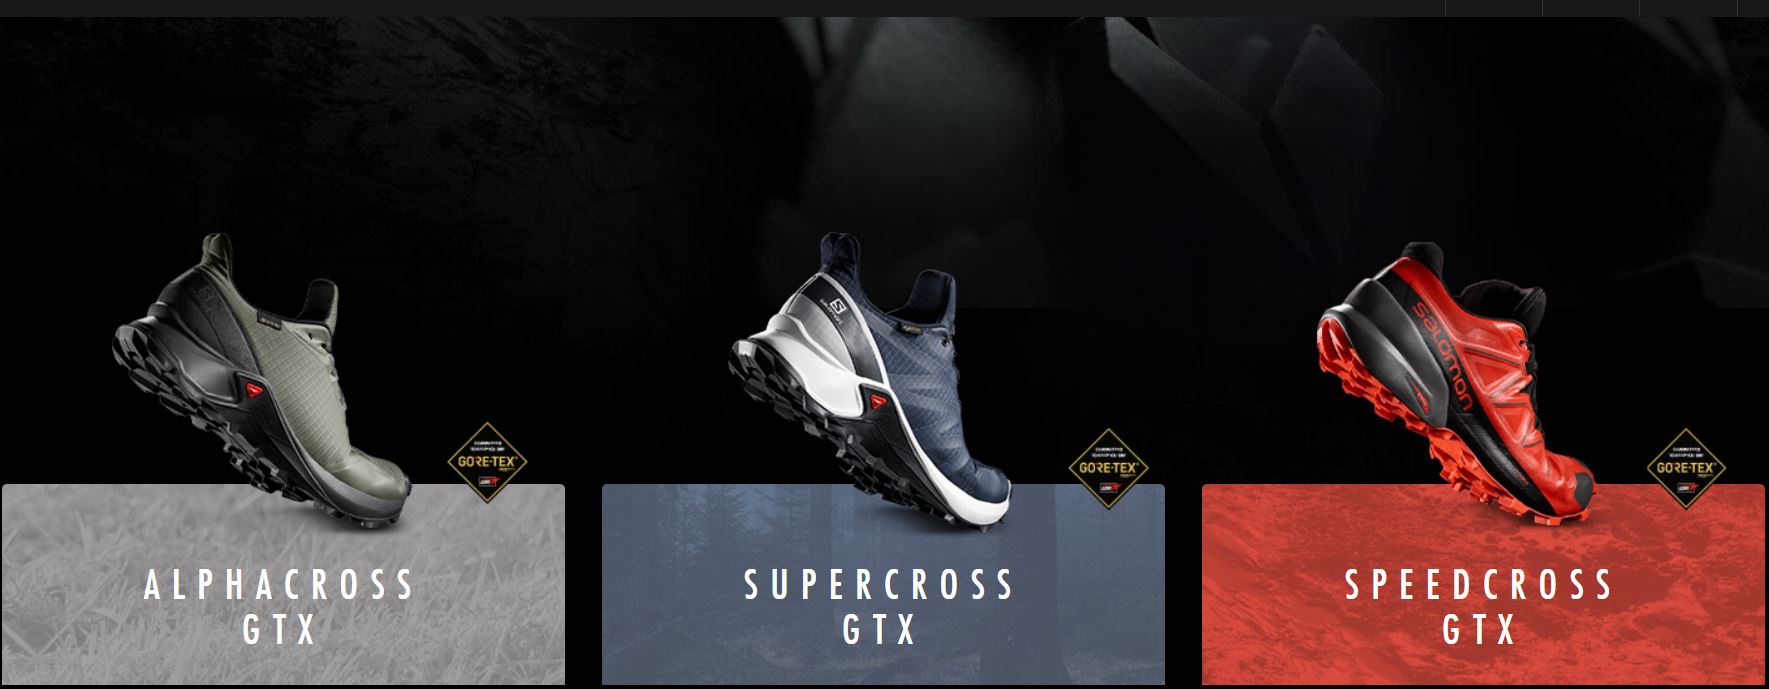 Salomon élargit sa gamme “Cross”… les chaussures Speedcross, Supercross et Alphacross arrivent.